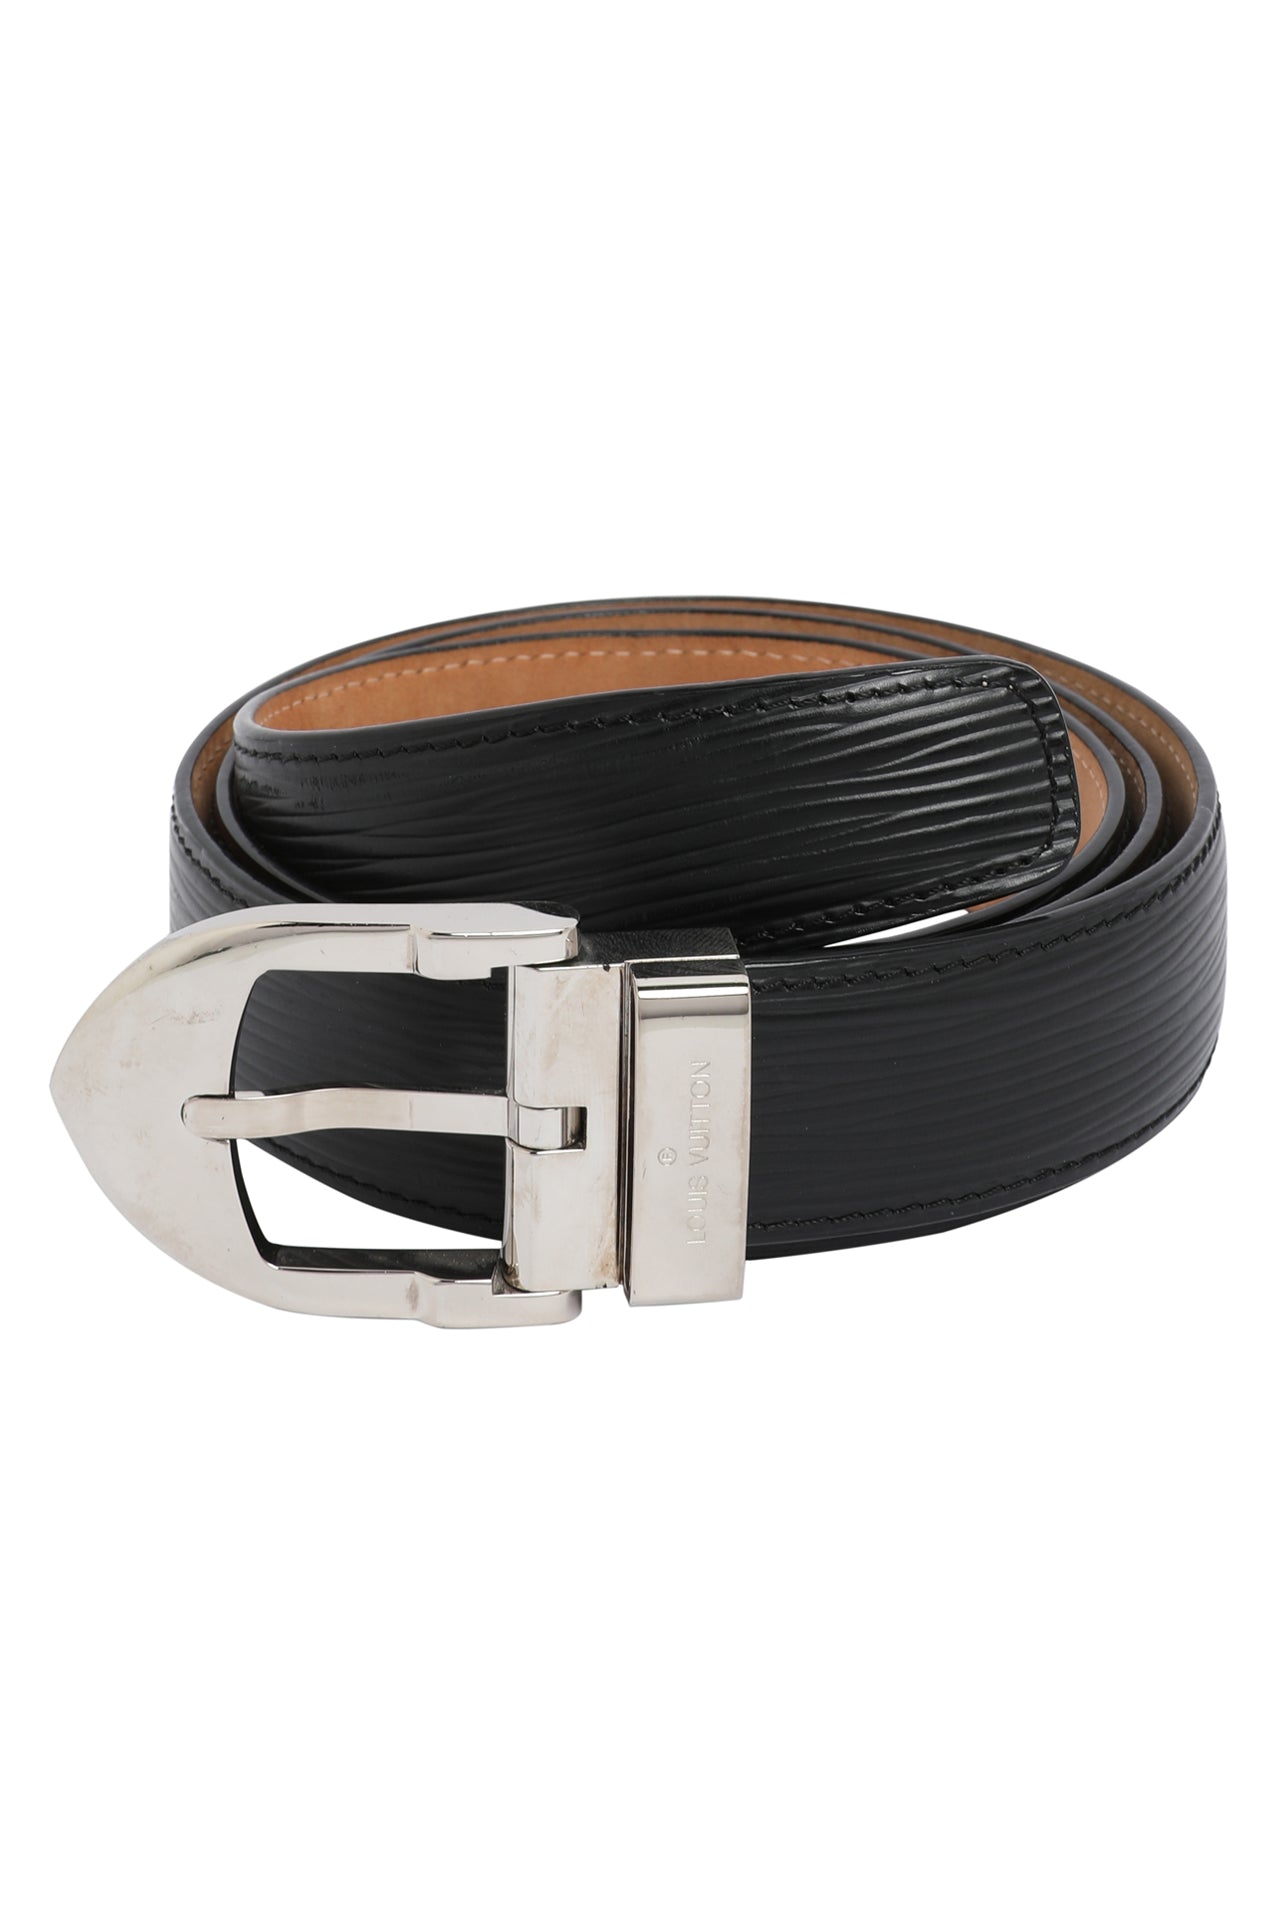 Louis Vuitton Epi Leather Boston Belt 90 cm